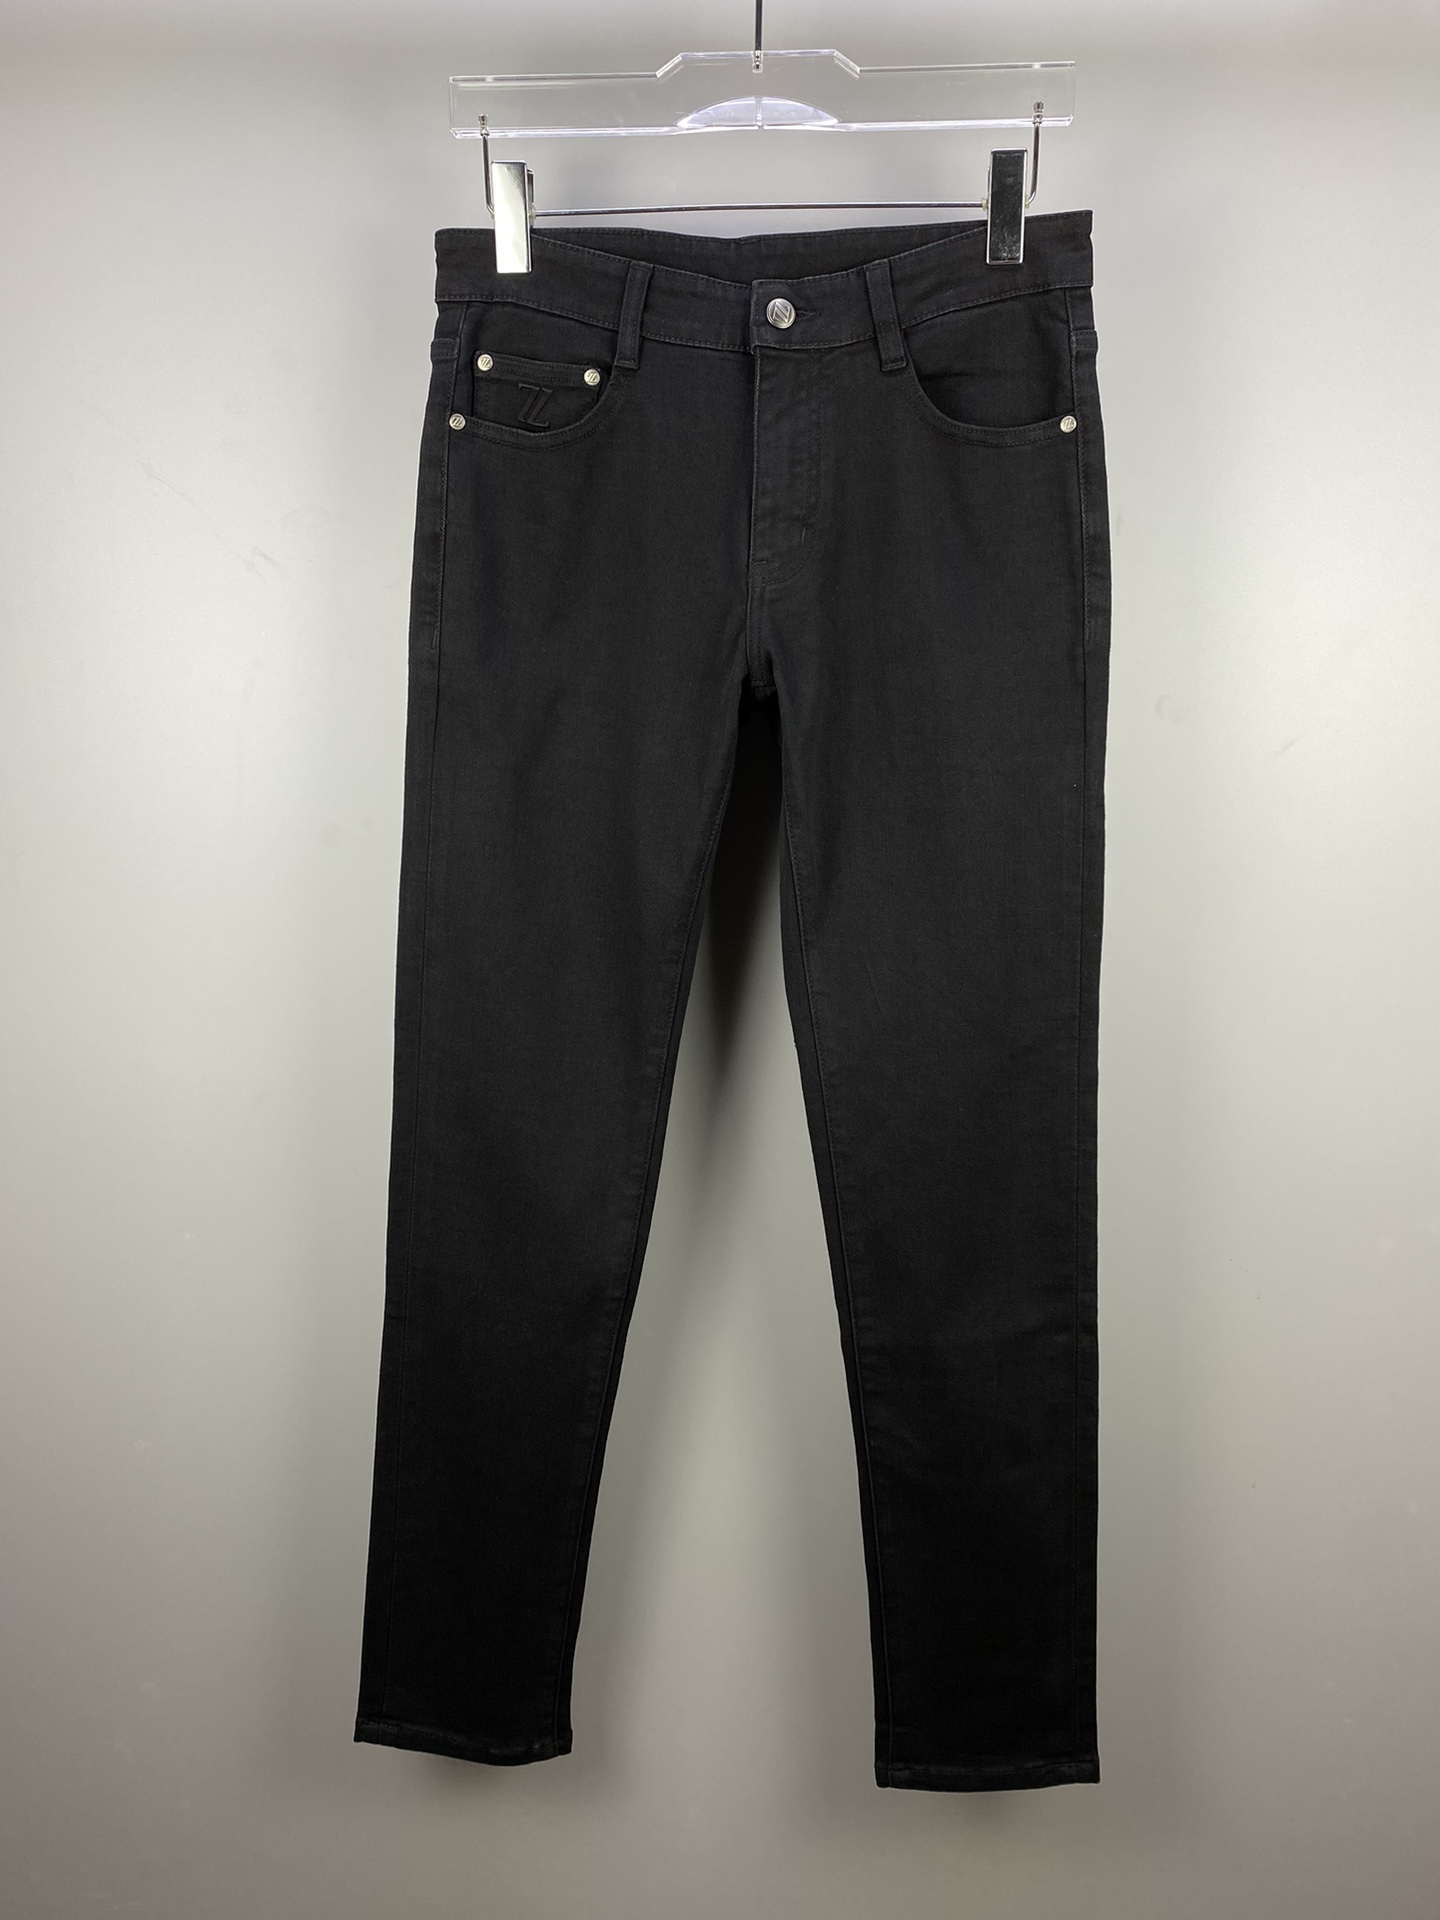 Zegna Clothing Jeans Shorts Black Cotton Vintage Casual